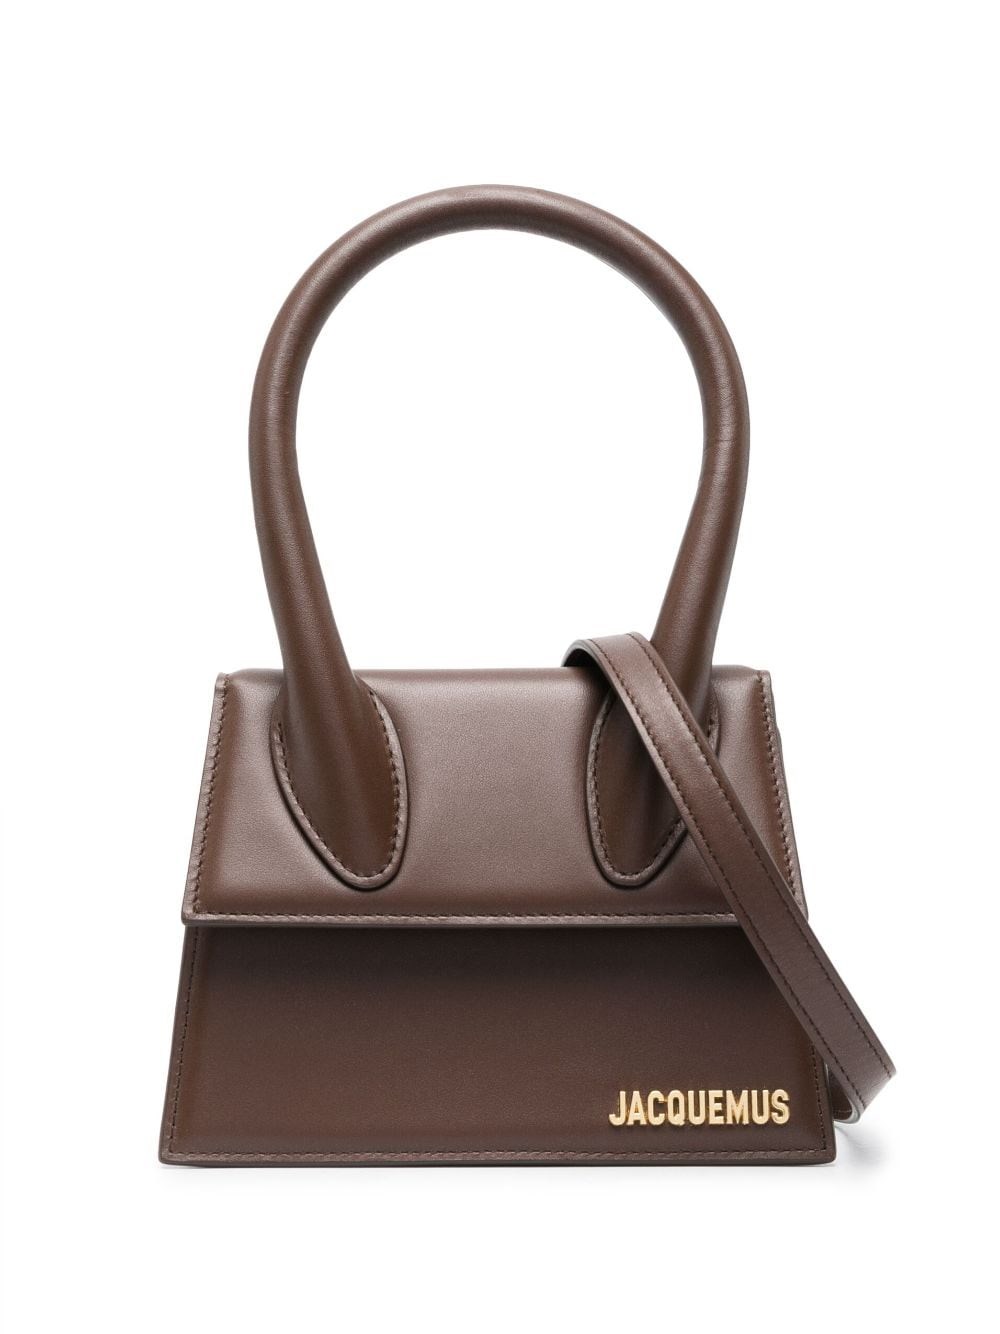 Jacquemus Le Chiquito Mini Bag In Brown